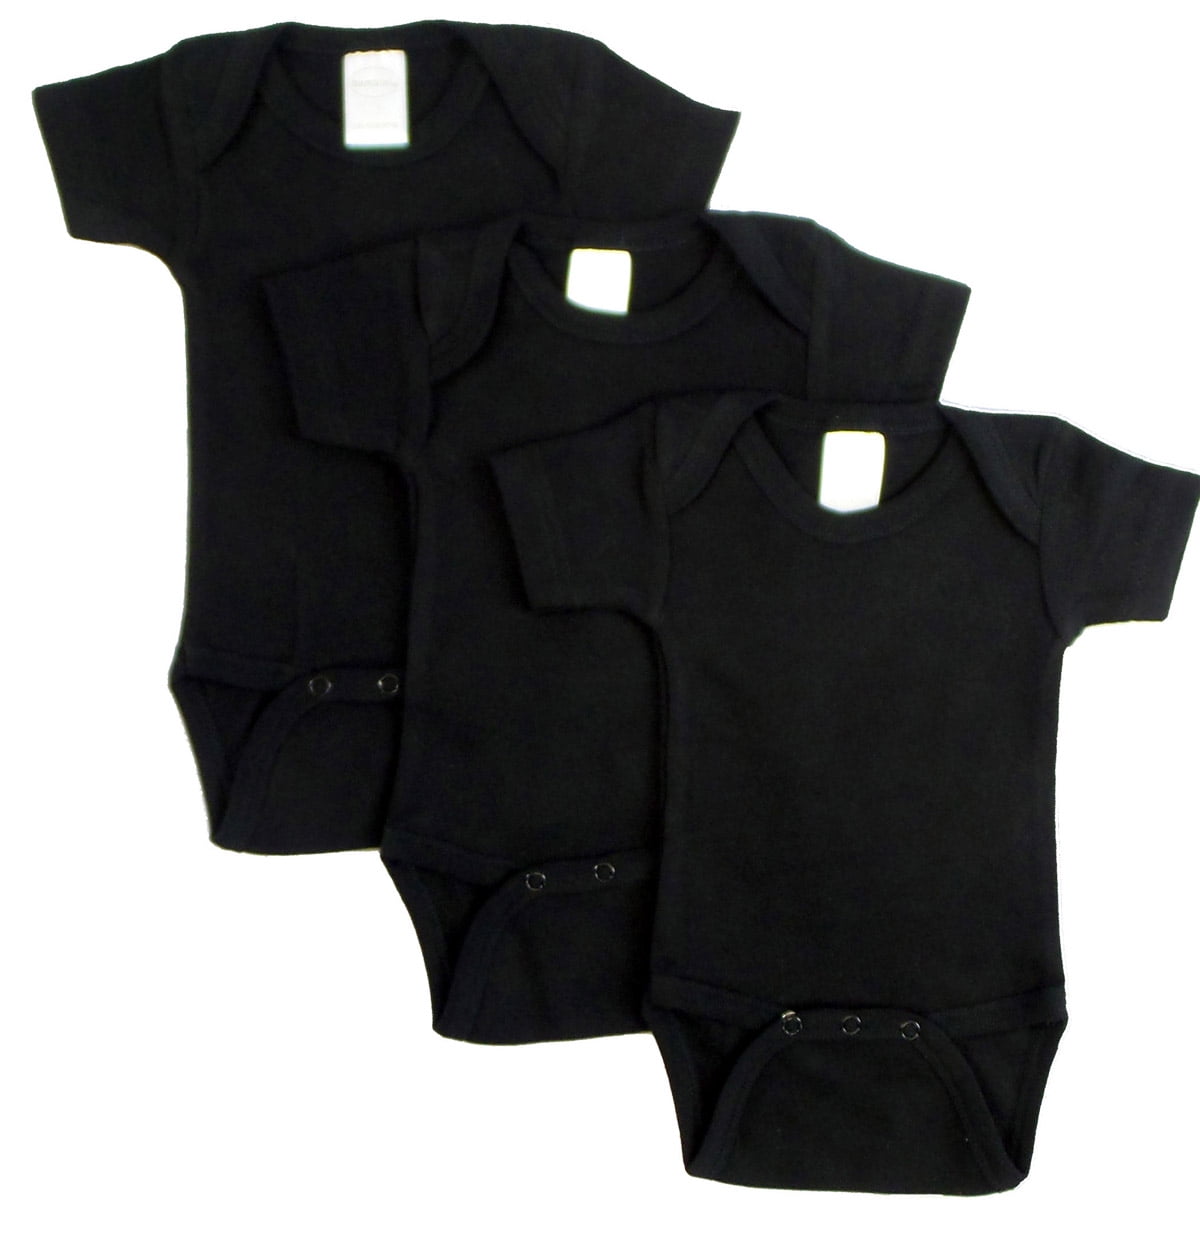 0010bl3-nb Short Sleeve - Black, Newborn - Pack Of 3